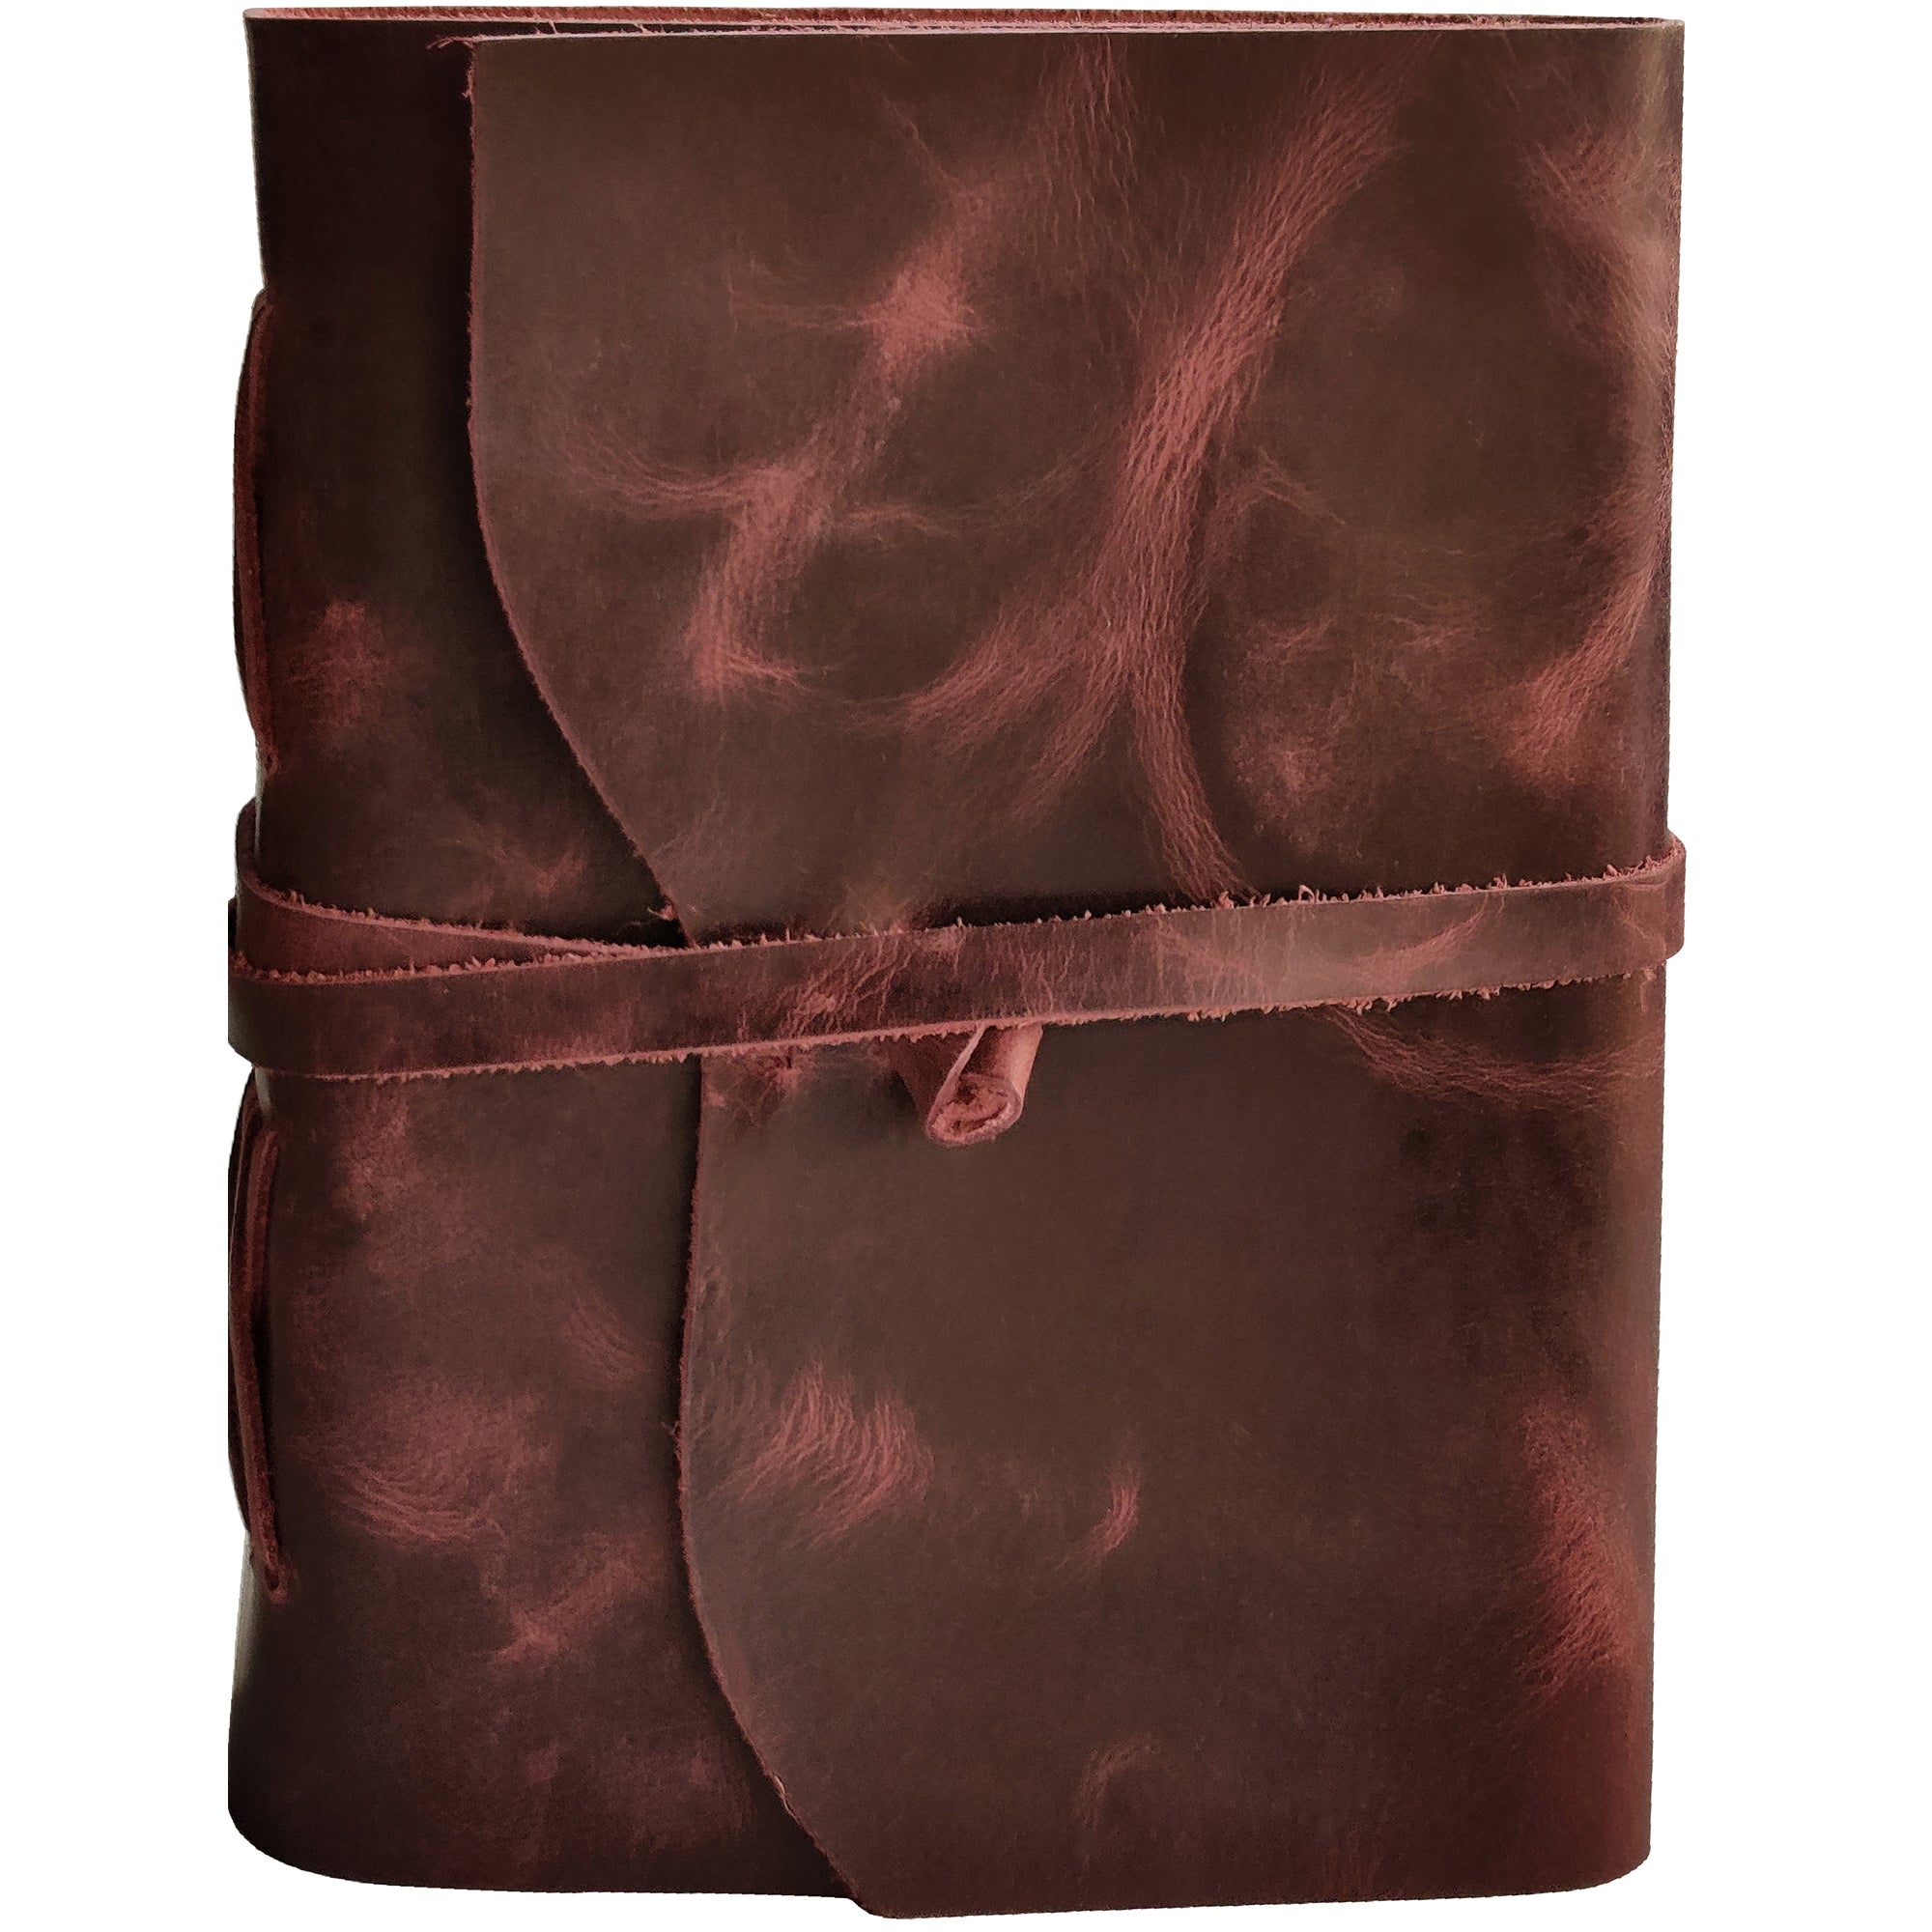 Vintage Brown Leather Roller Bag – No Name, Key and Locks Work